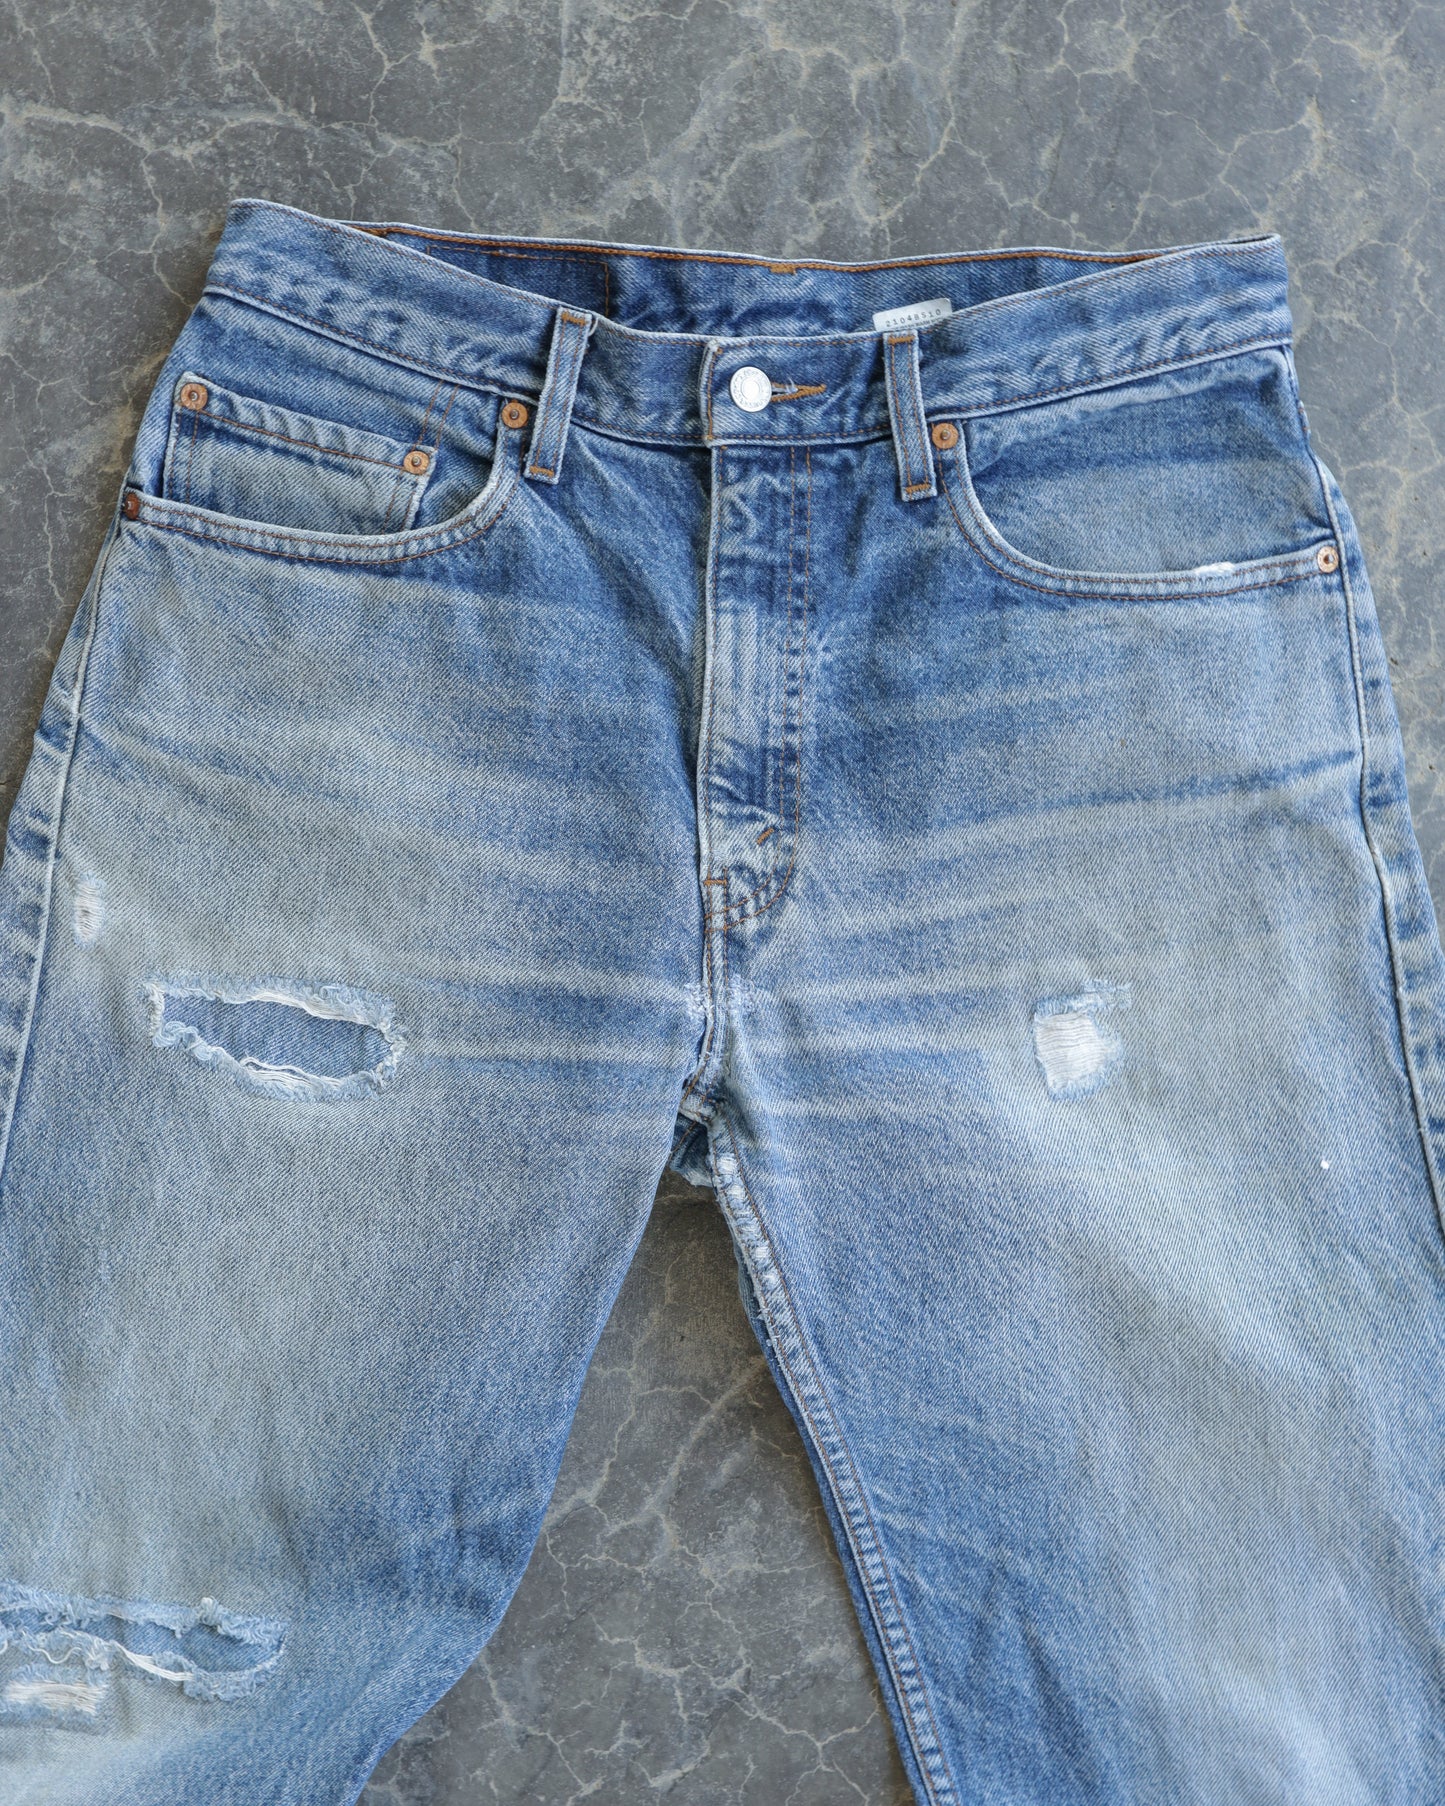 90s Levi’s Light Wash Denim Jeans - 33 x 32